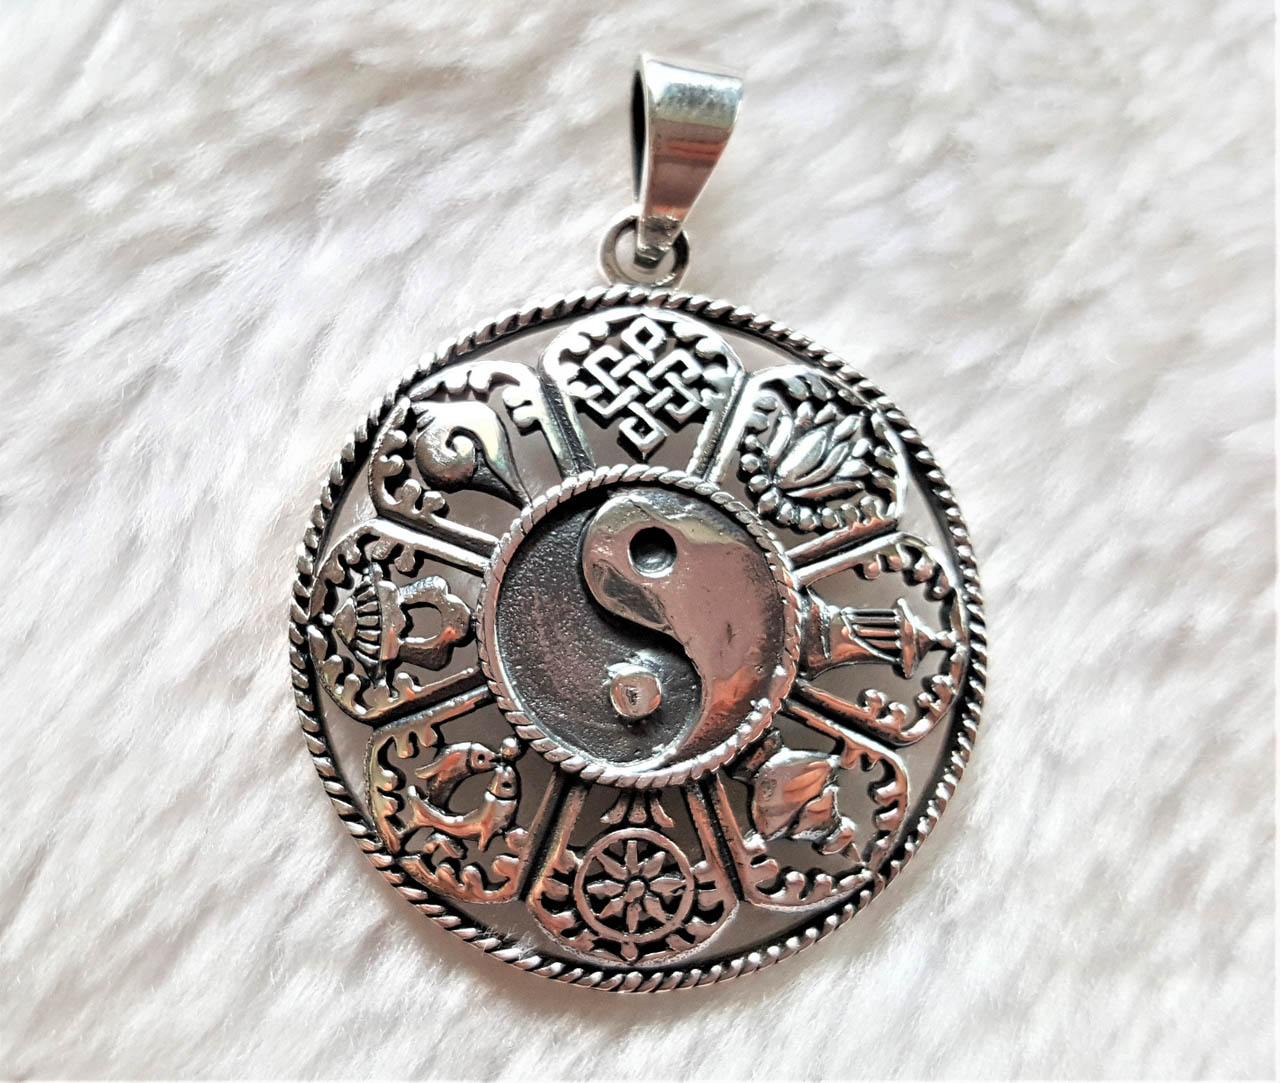 Genuine sterling silver pendant solid hallmarked 925 Yin Yang 